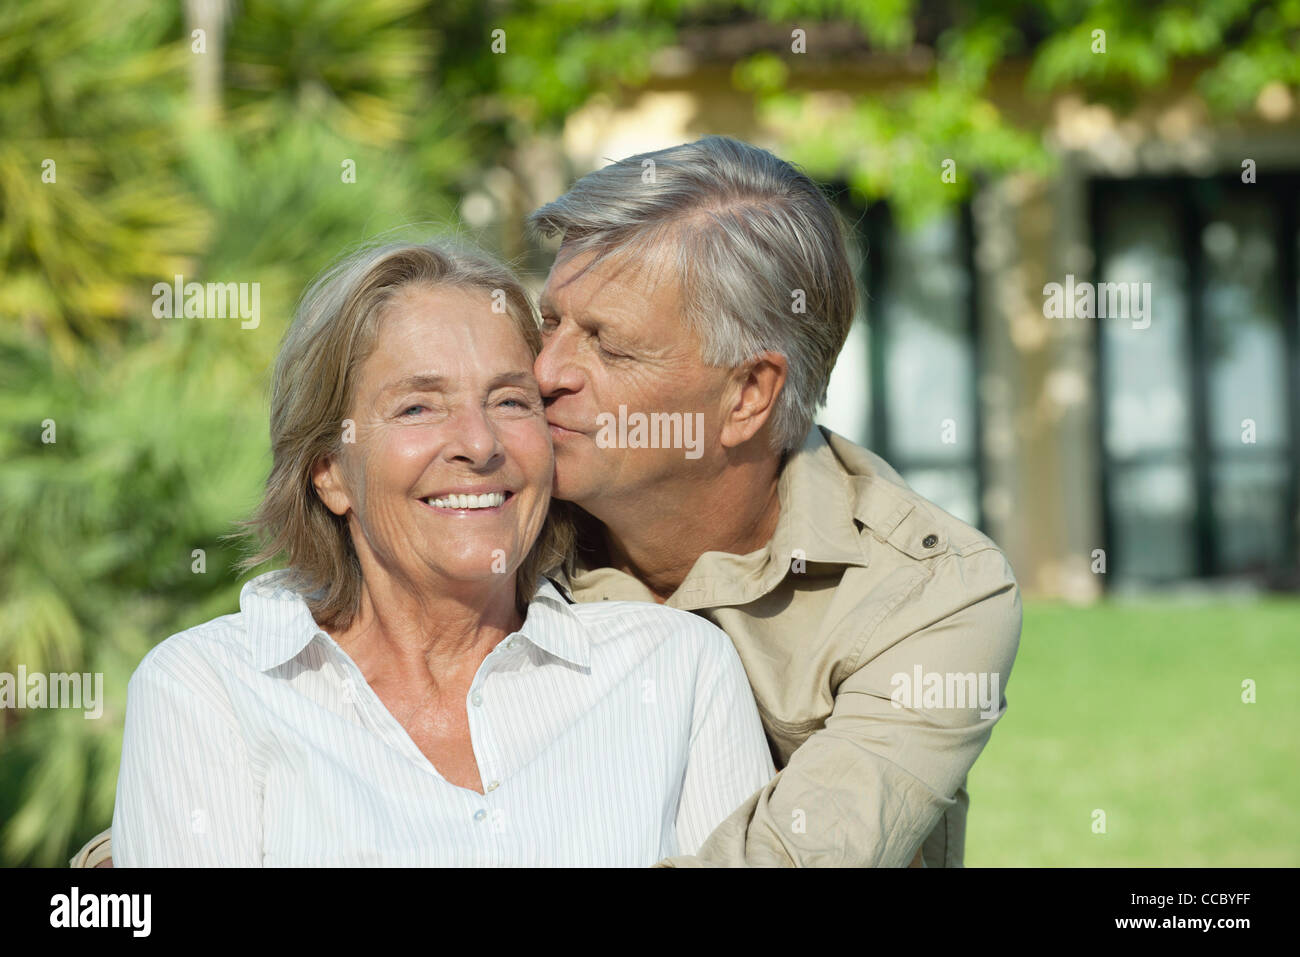 Senior man kissing his wife on the cheek Stock Photo